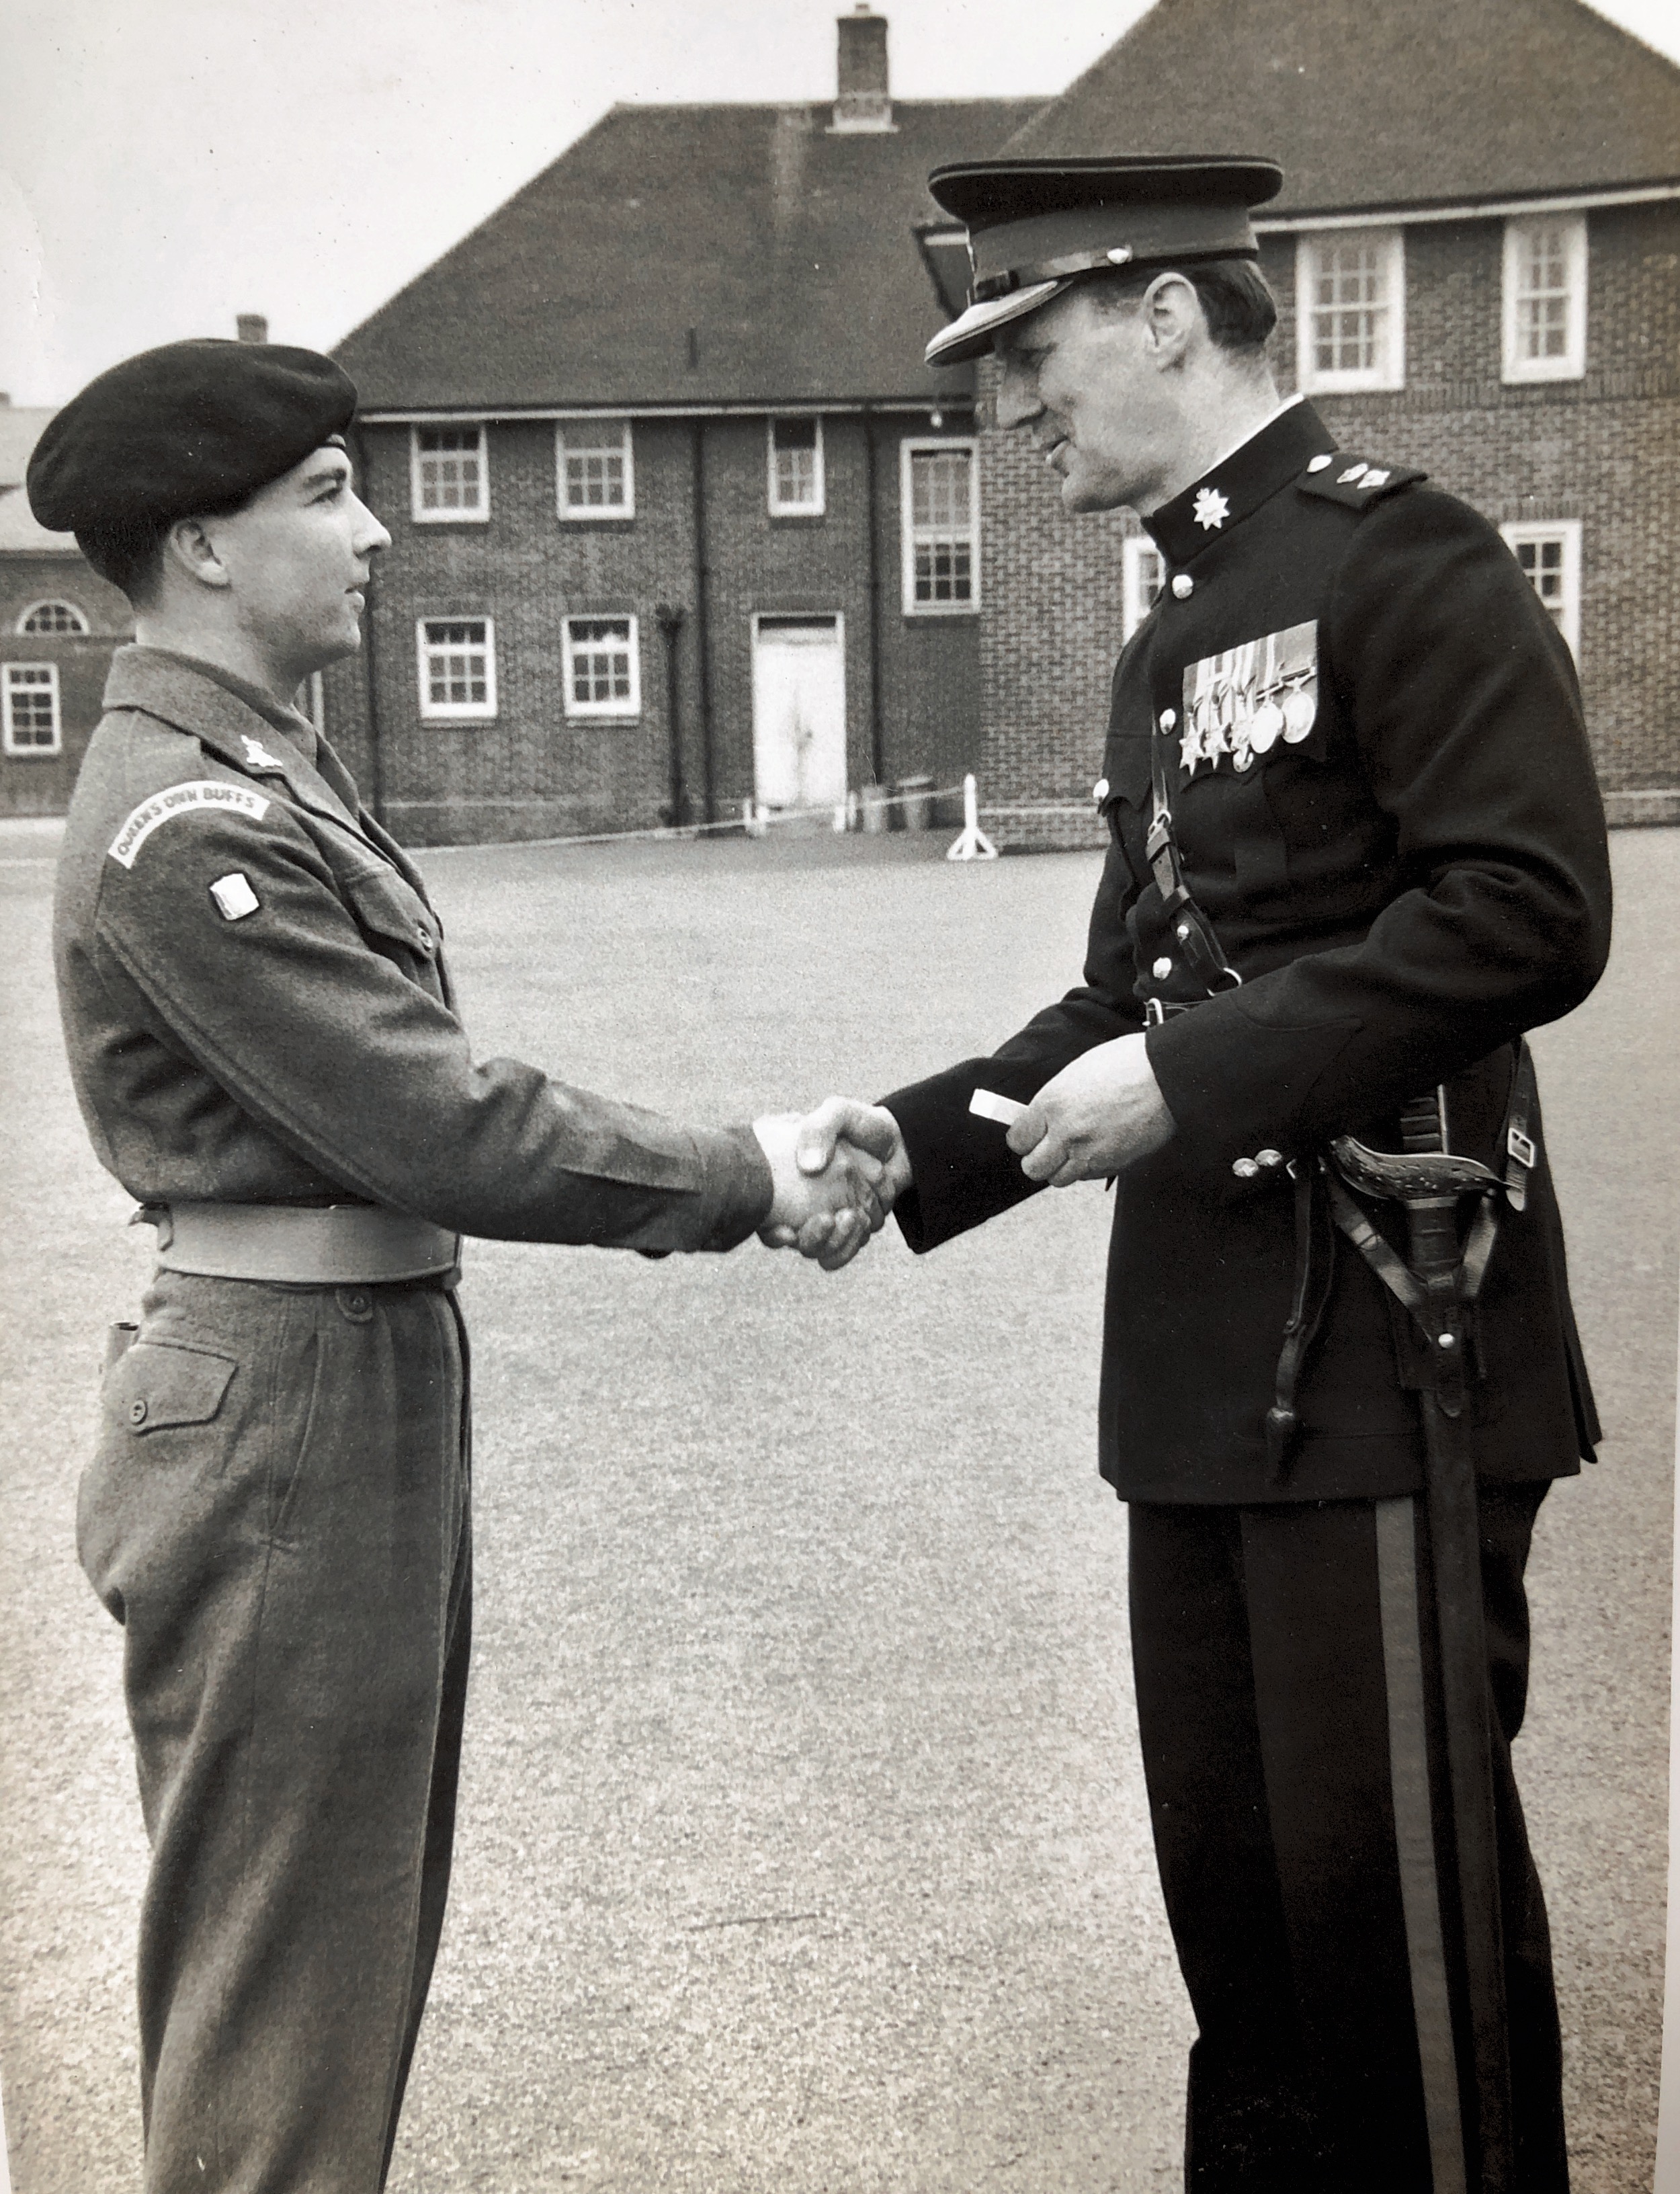 Lt Colonel PEC Andrews congratulating the top recruit at Wemyss Barracks in Canterbury in 1961